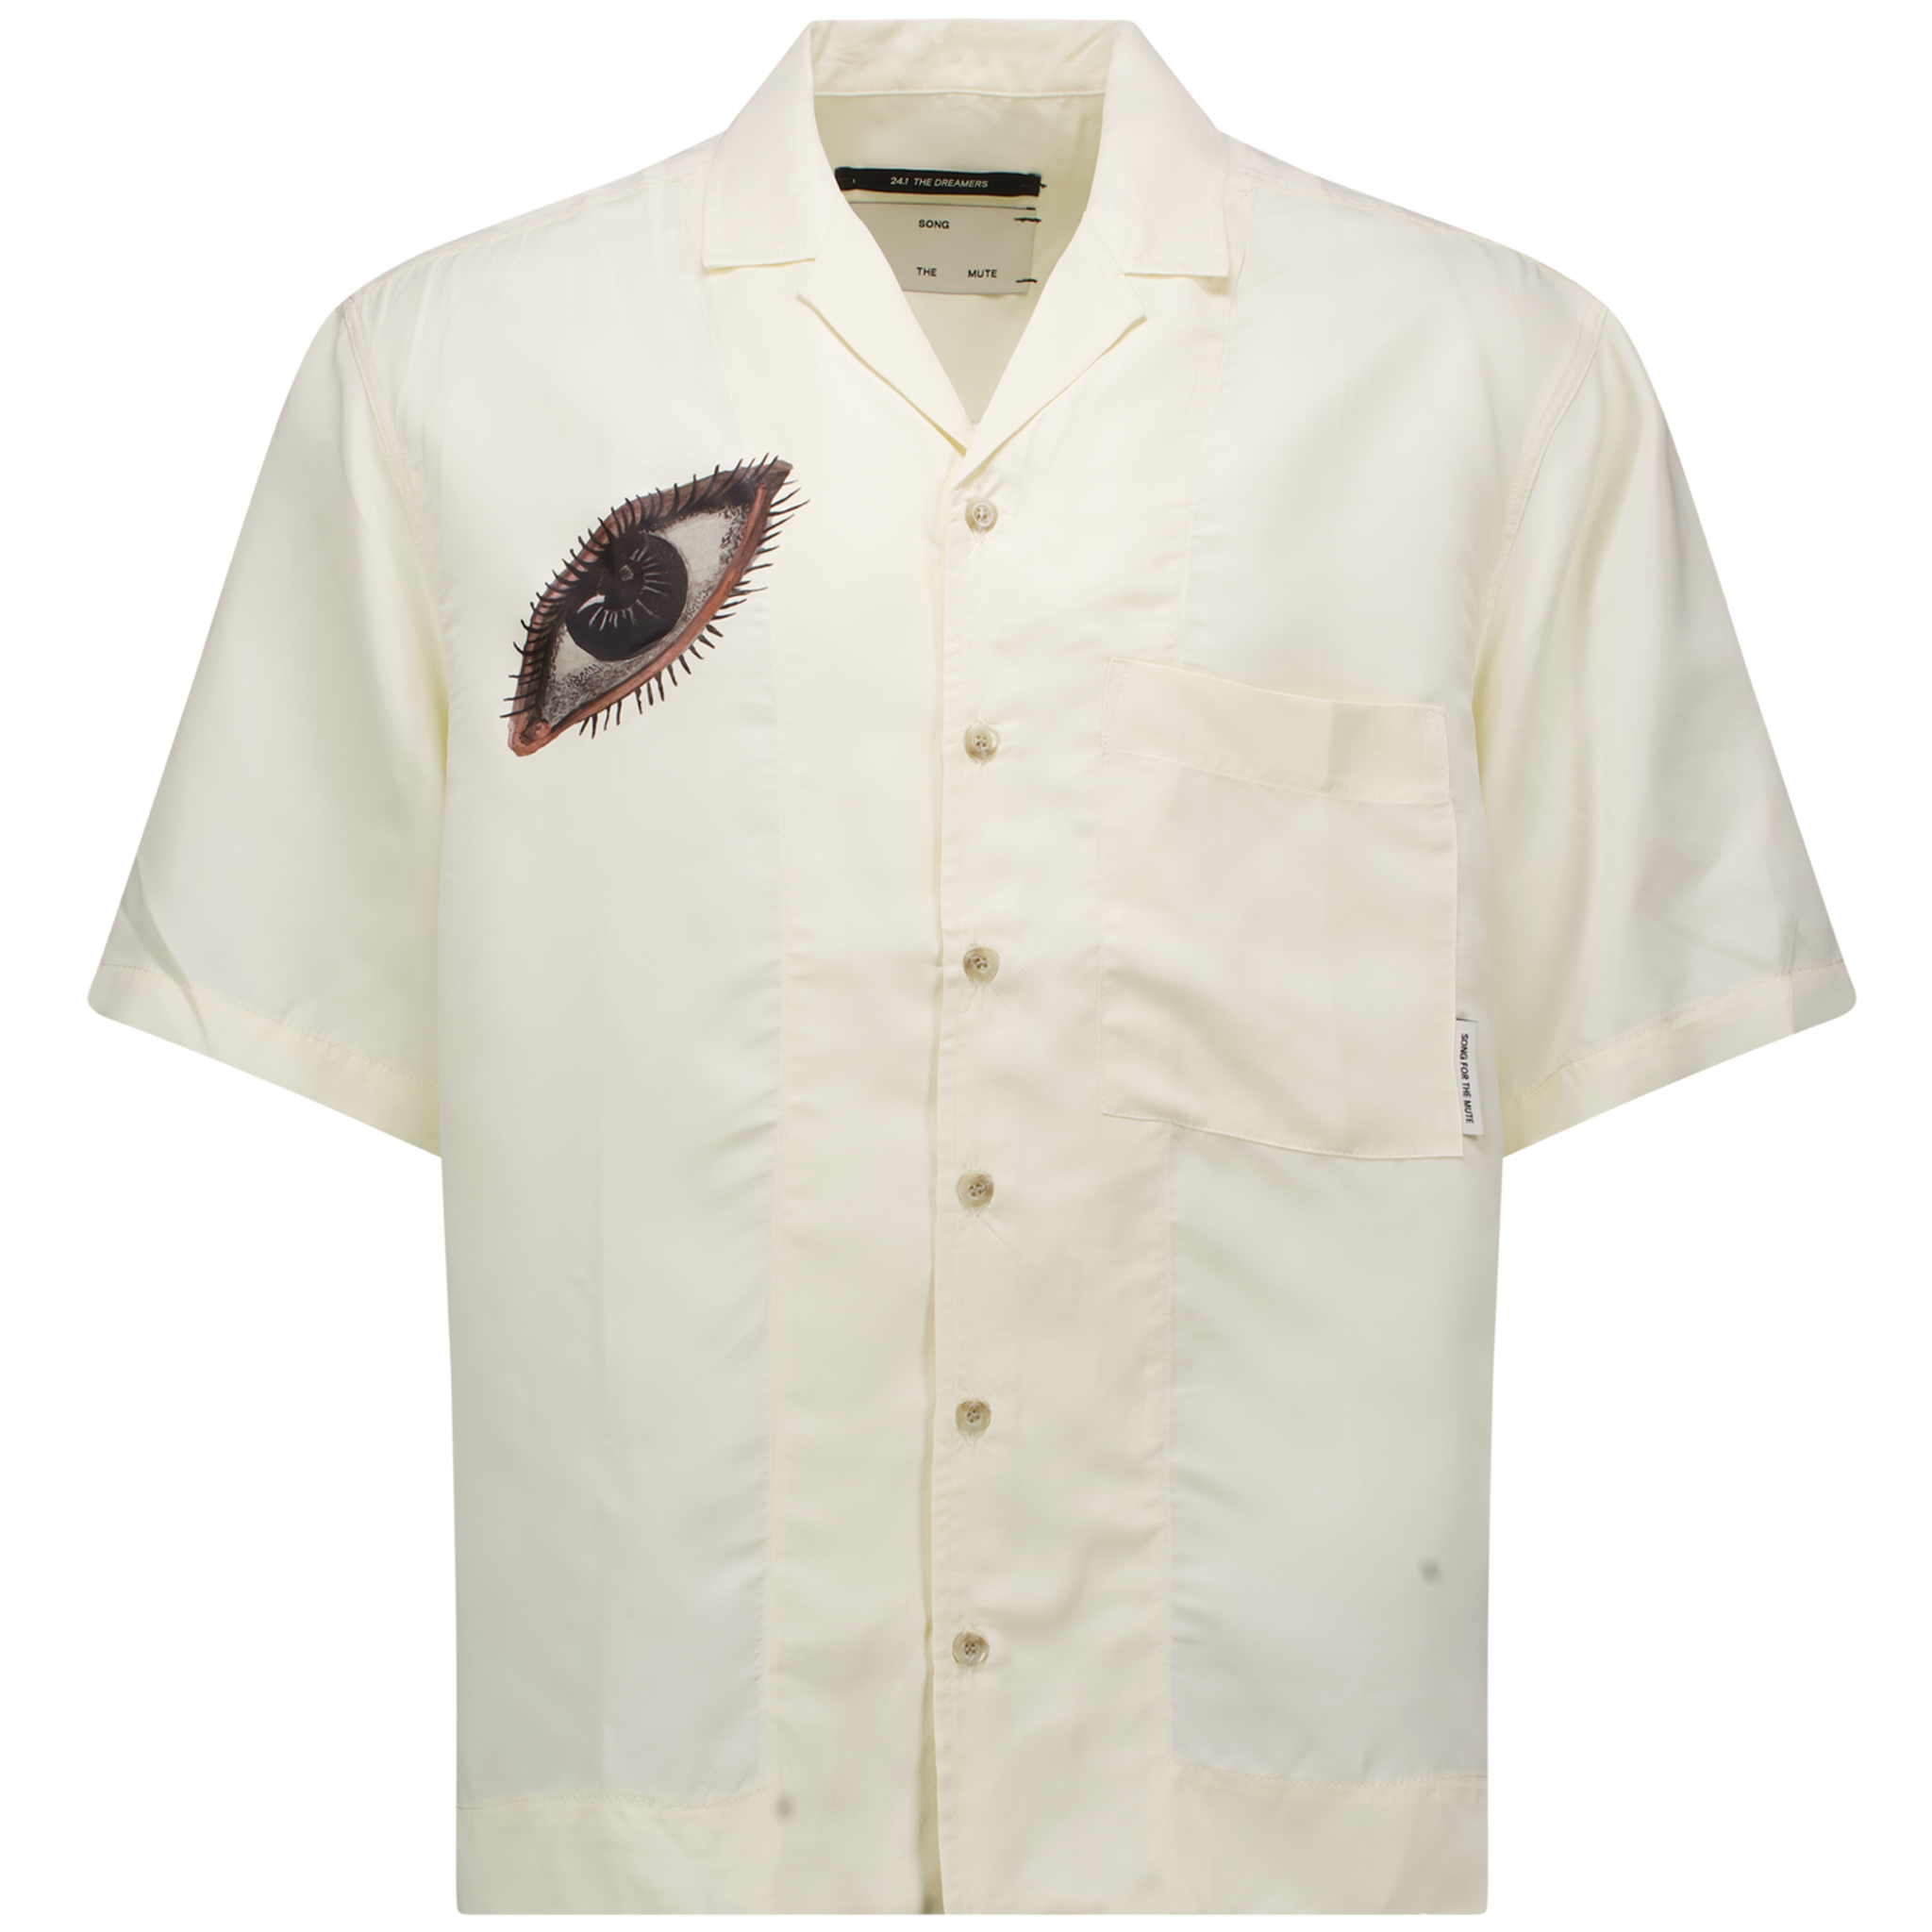 'Eye' SS Box Shirt